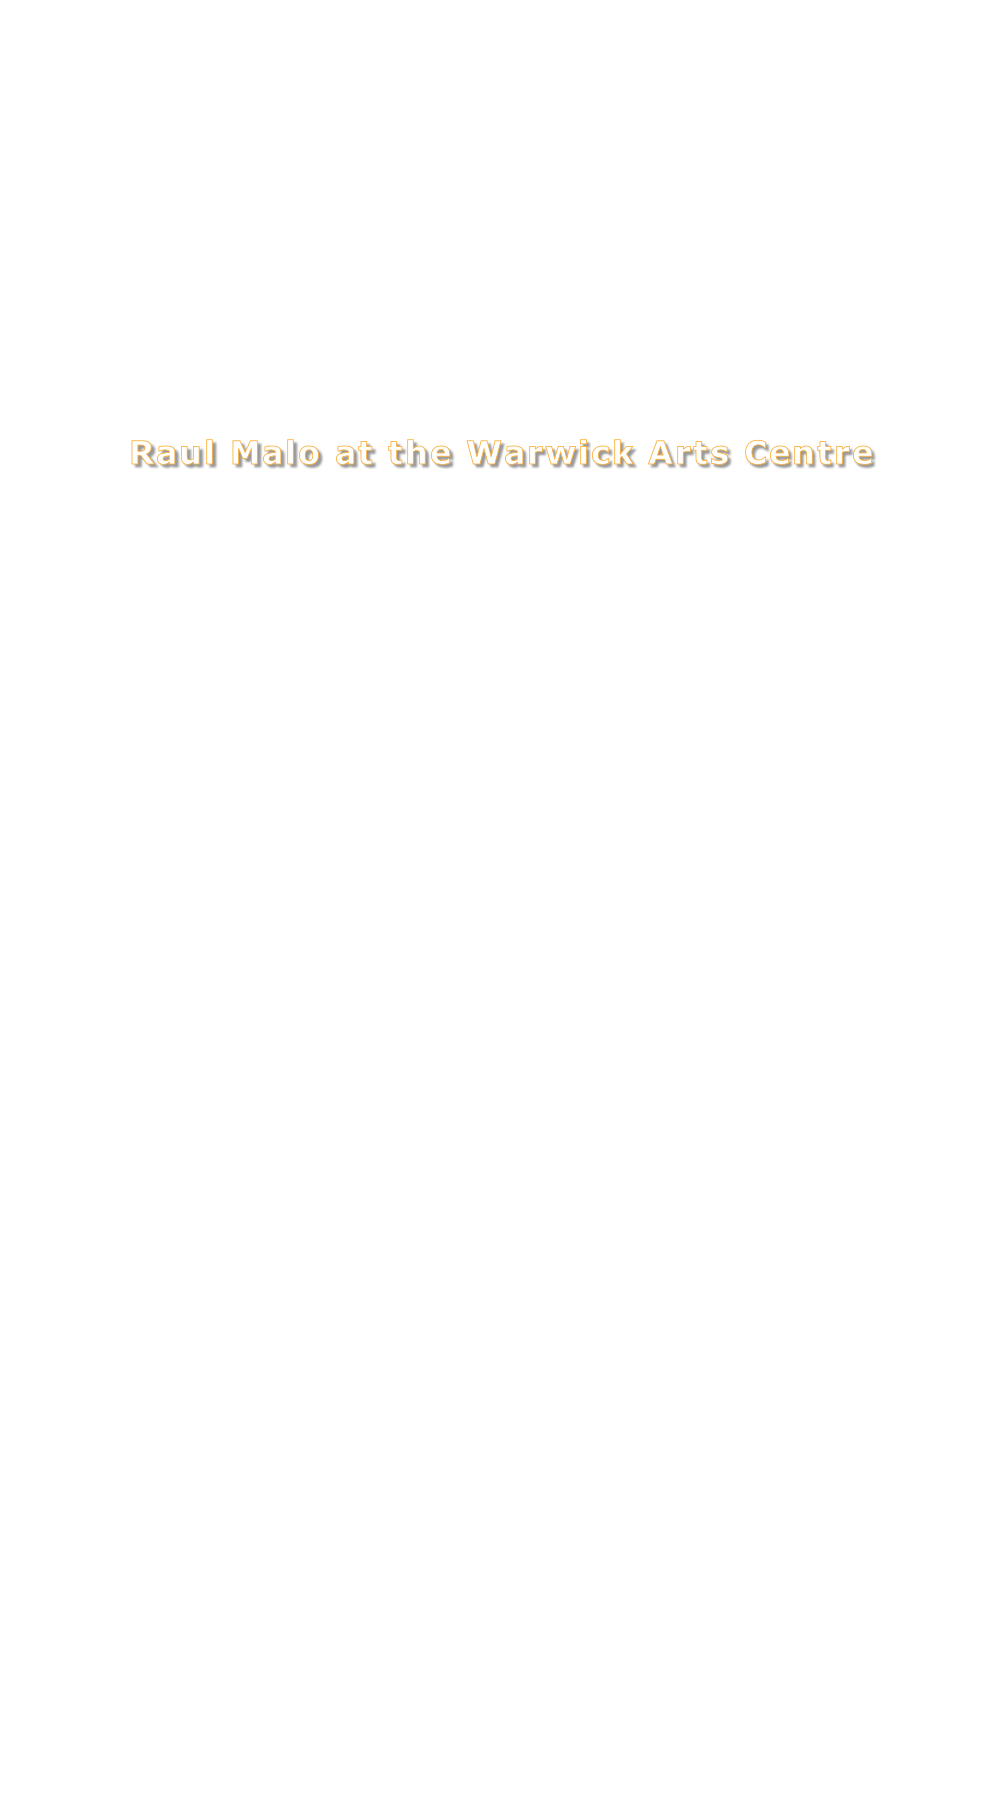 Raul Malo at the Warwick Arts Centre
